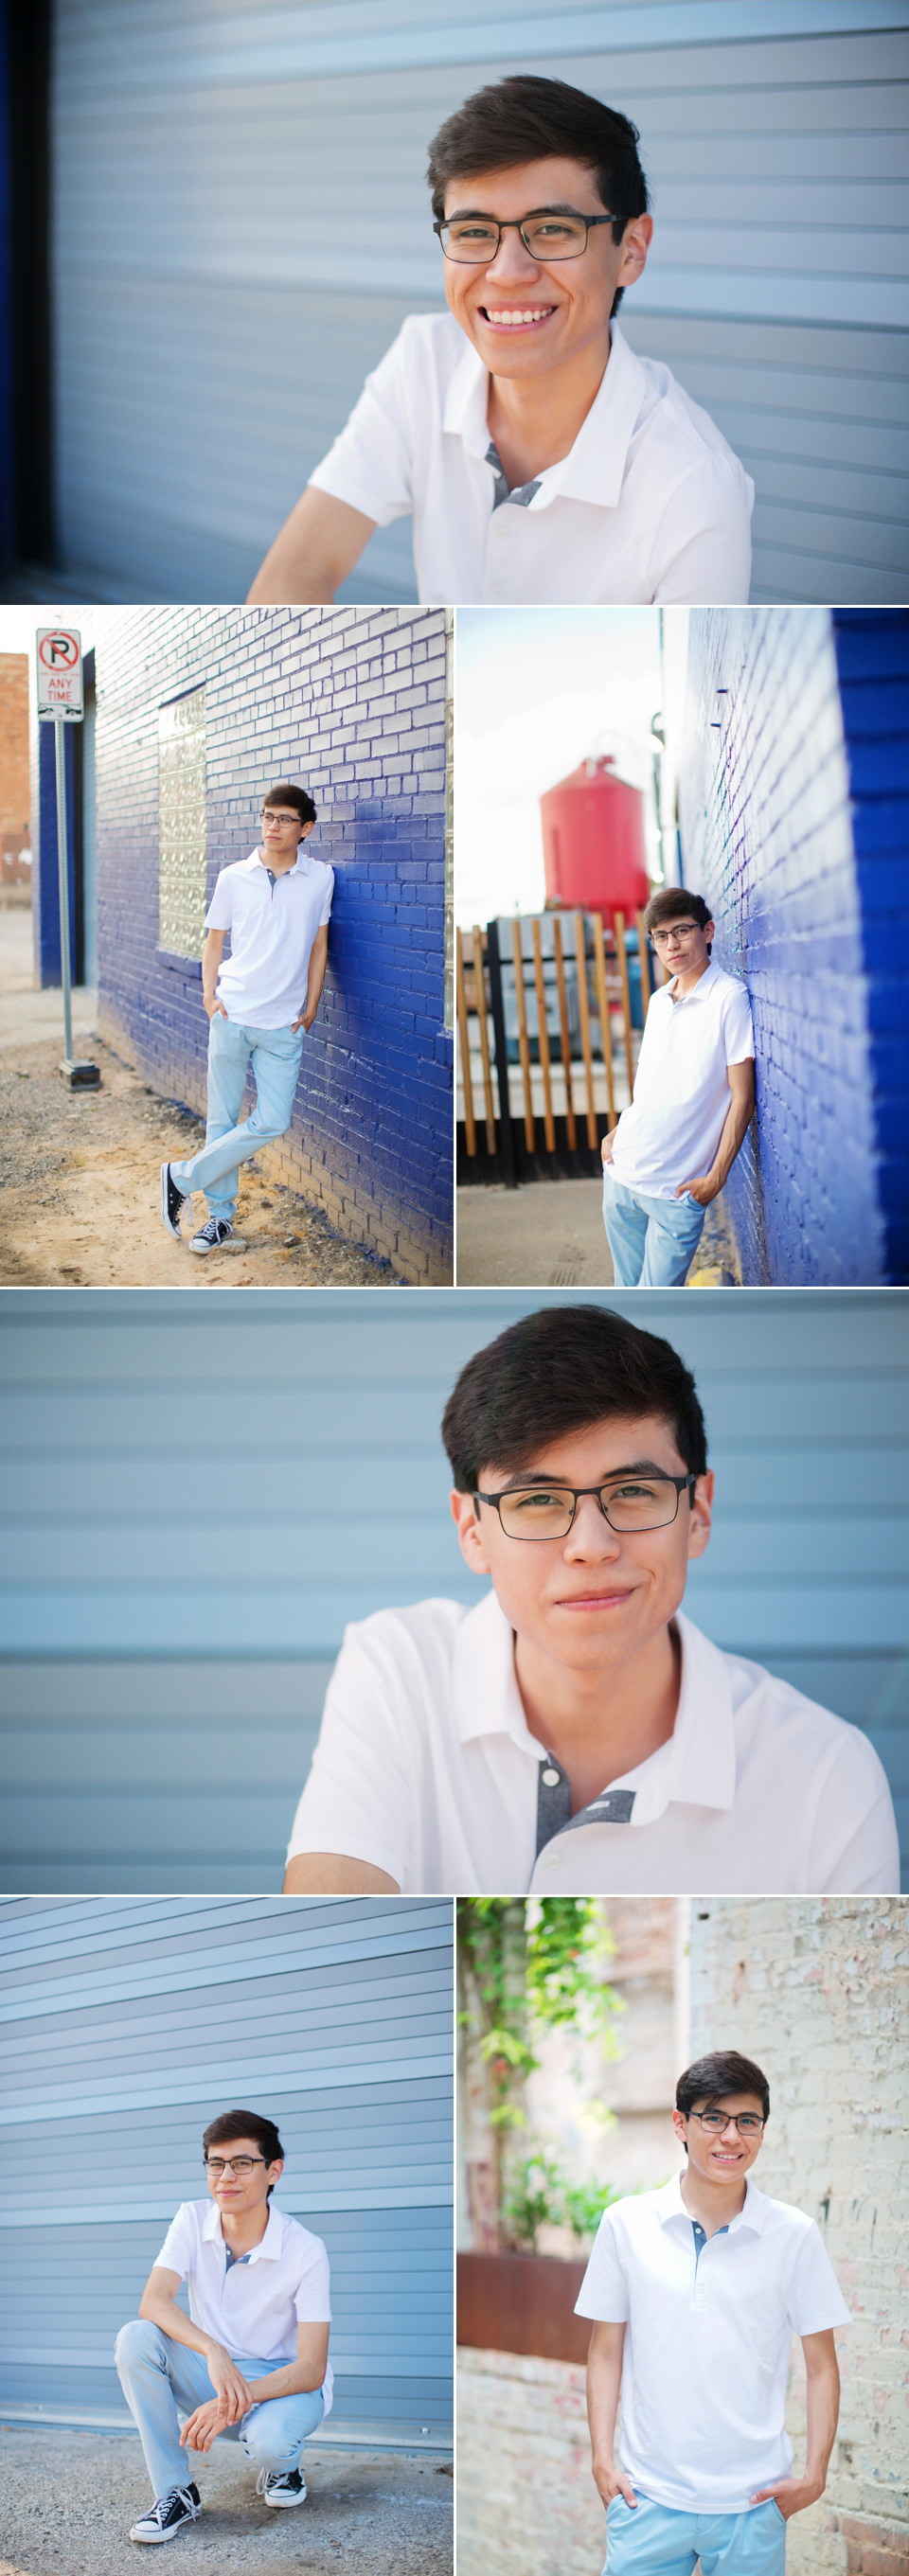 Multiple shots of high school senior posing against textured blue walls